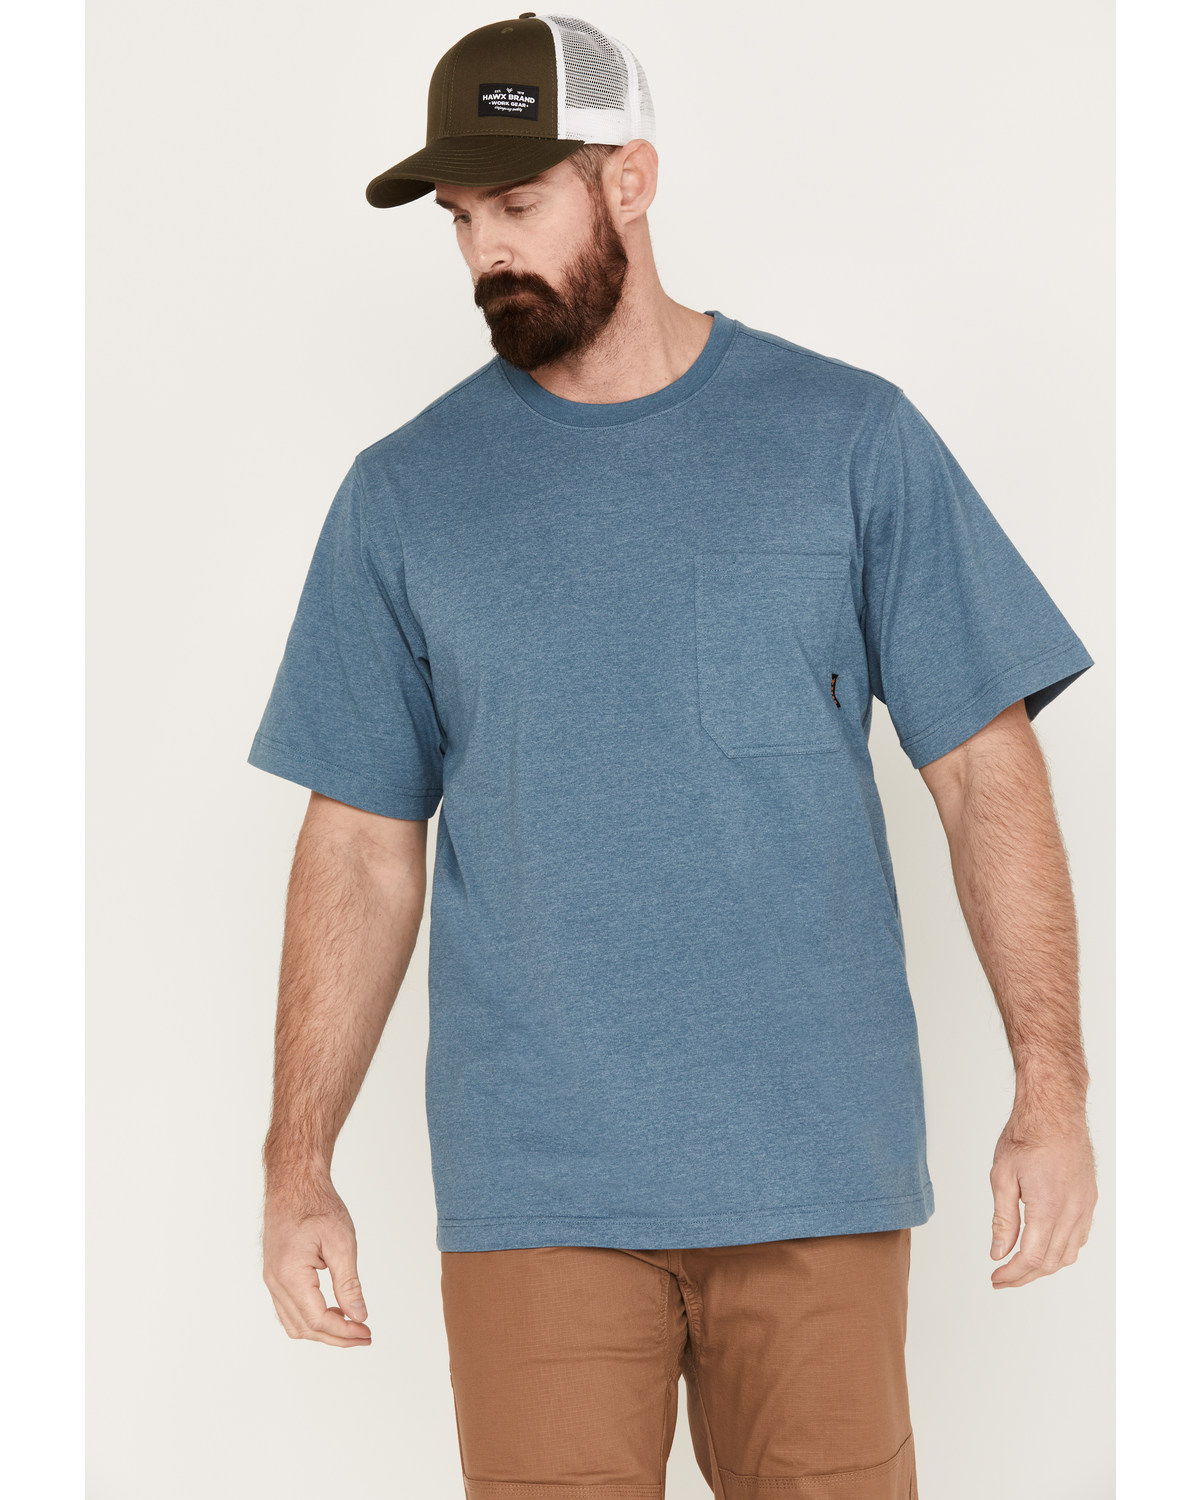 Hawx Men's Forge Short Sleeve Pocket T-Shirt